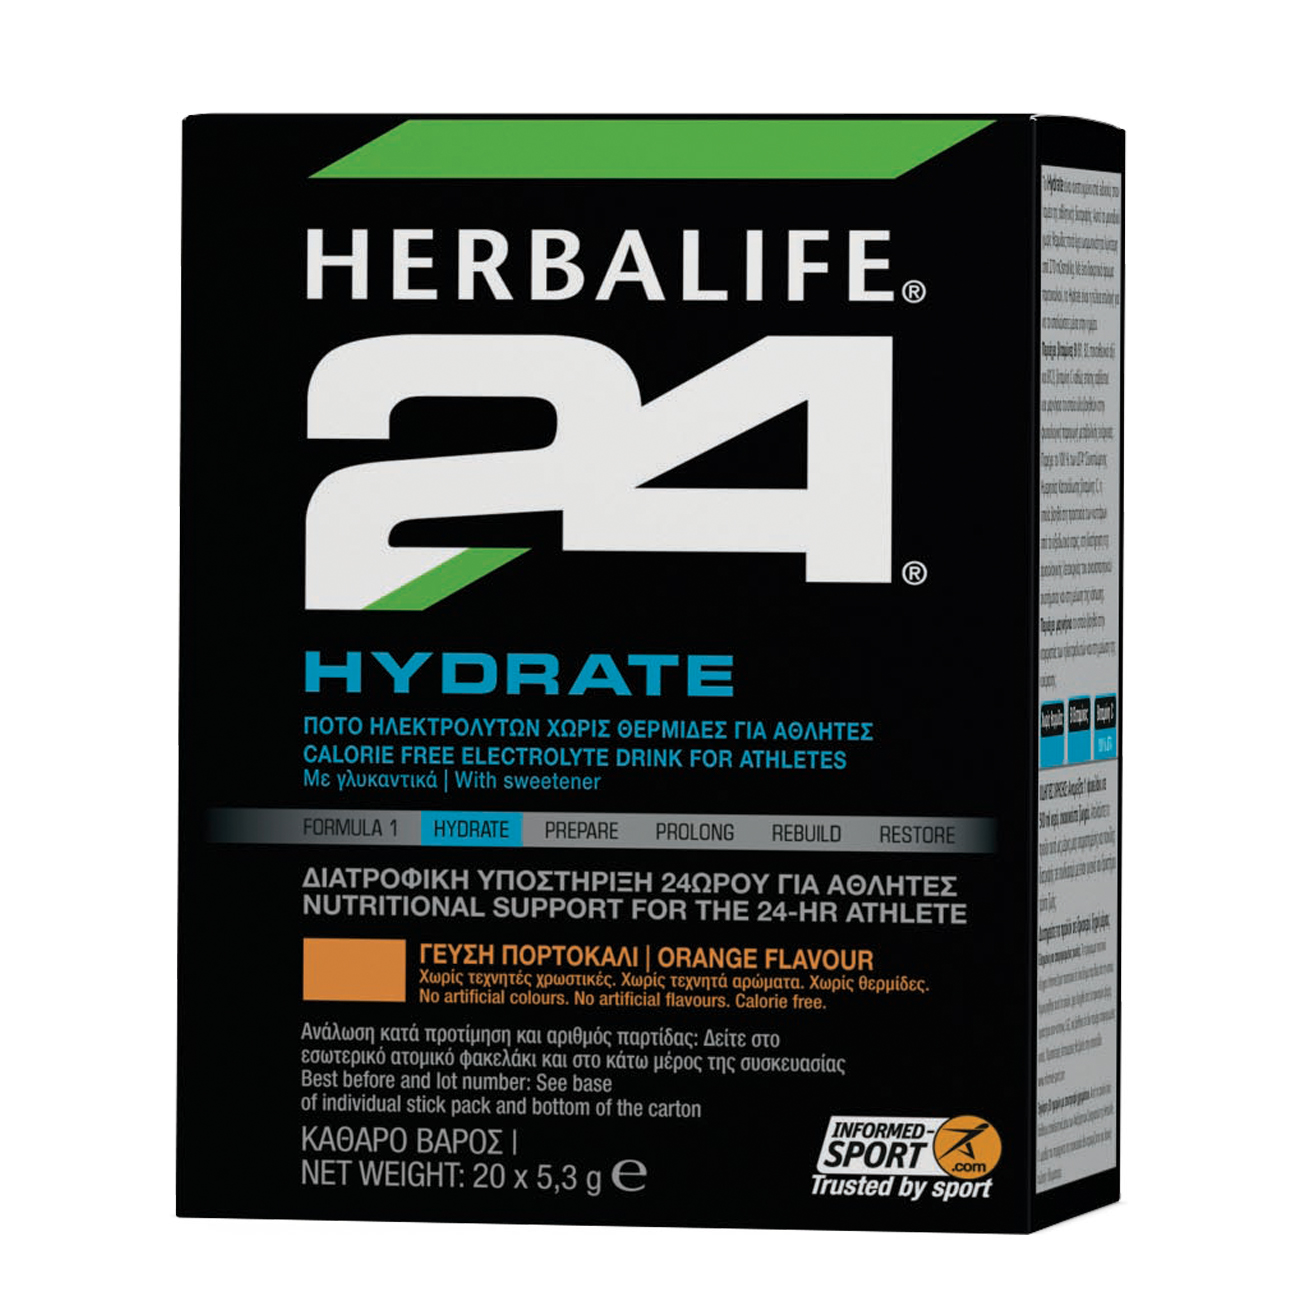 Herbalife24® Hydrate Ποτό Ηλεκτρολυτών  Πορτοκάλι product shot.